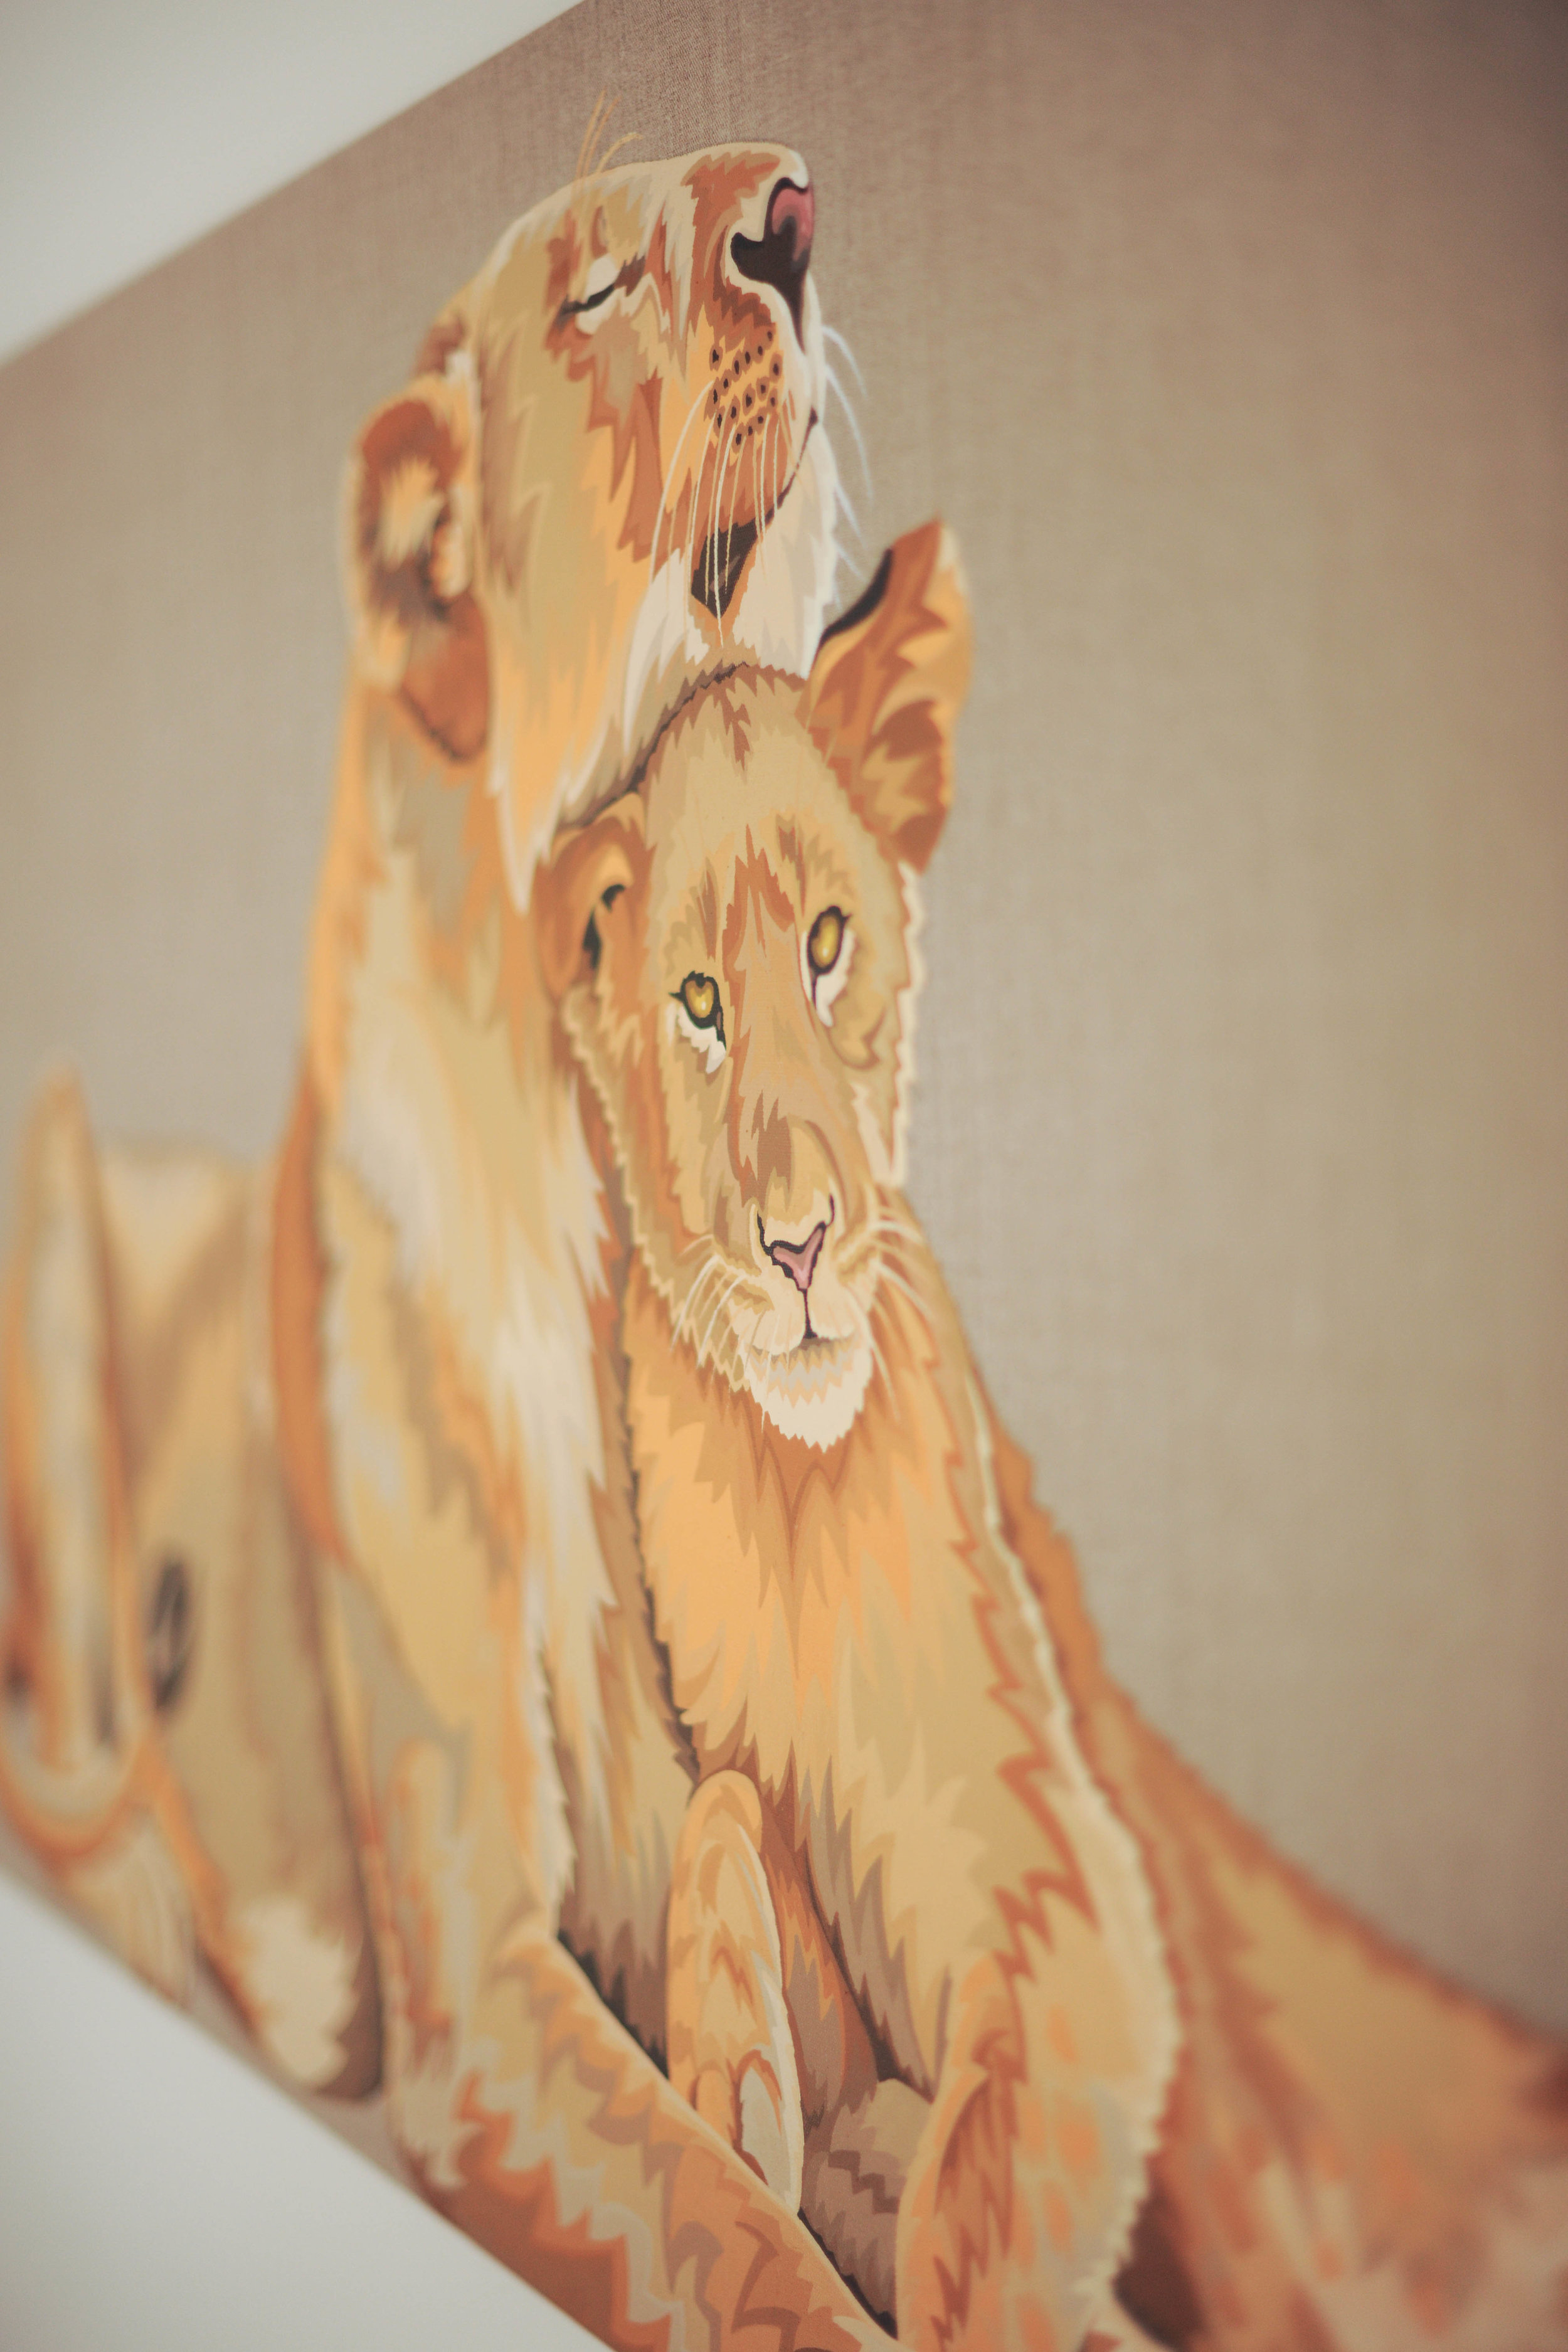 Lion & Cub Painting 1-2.jpg